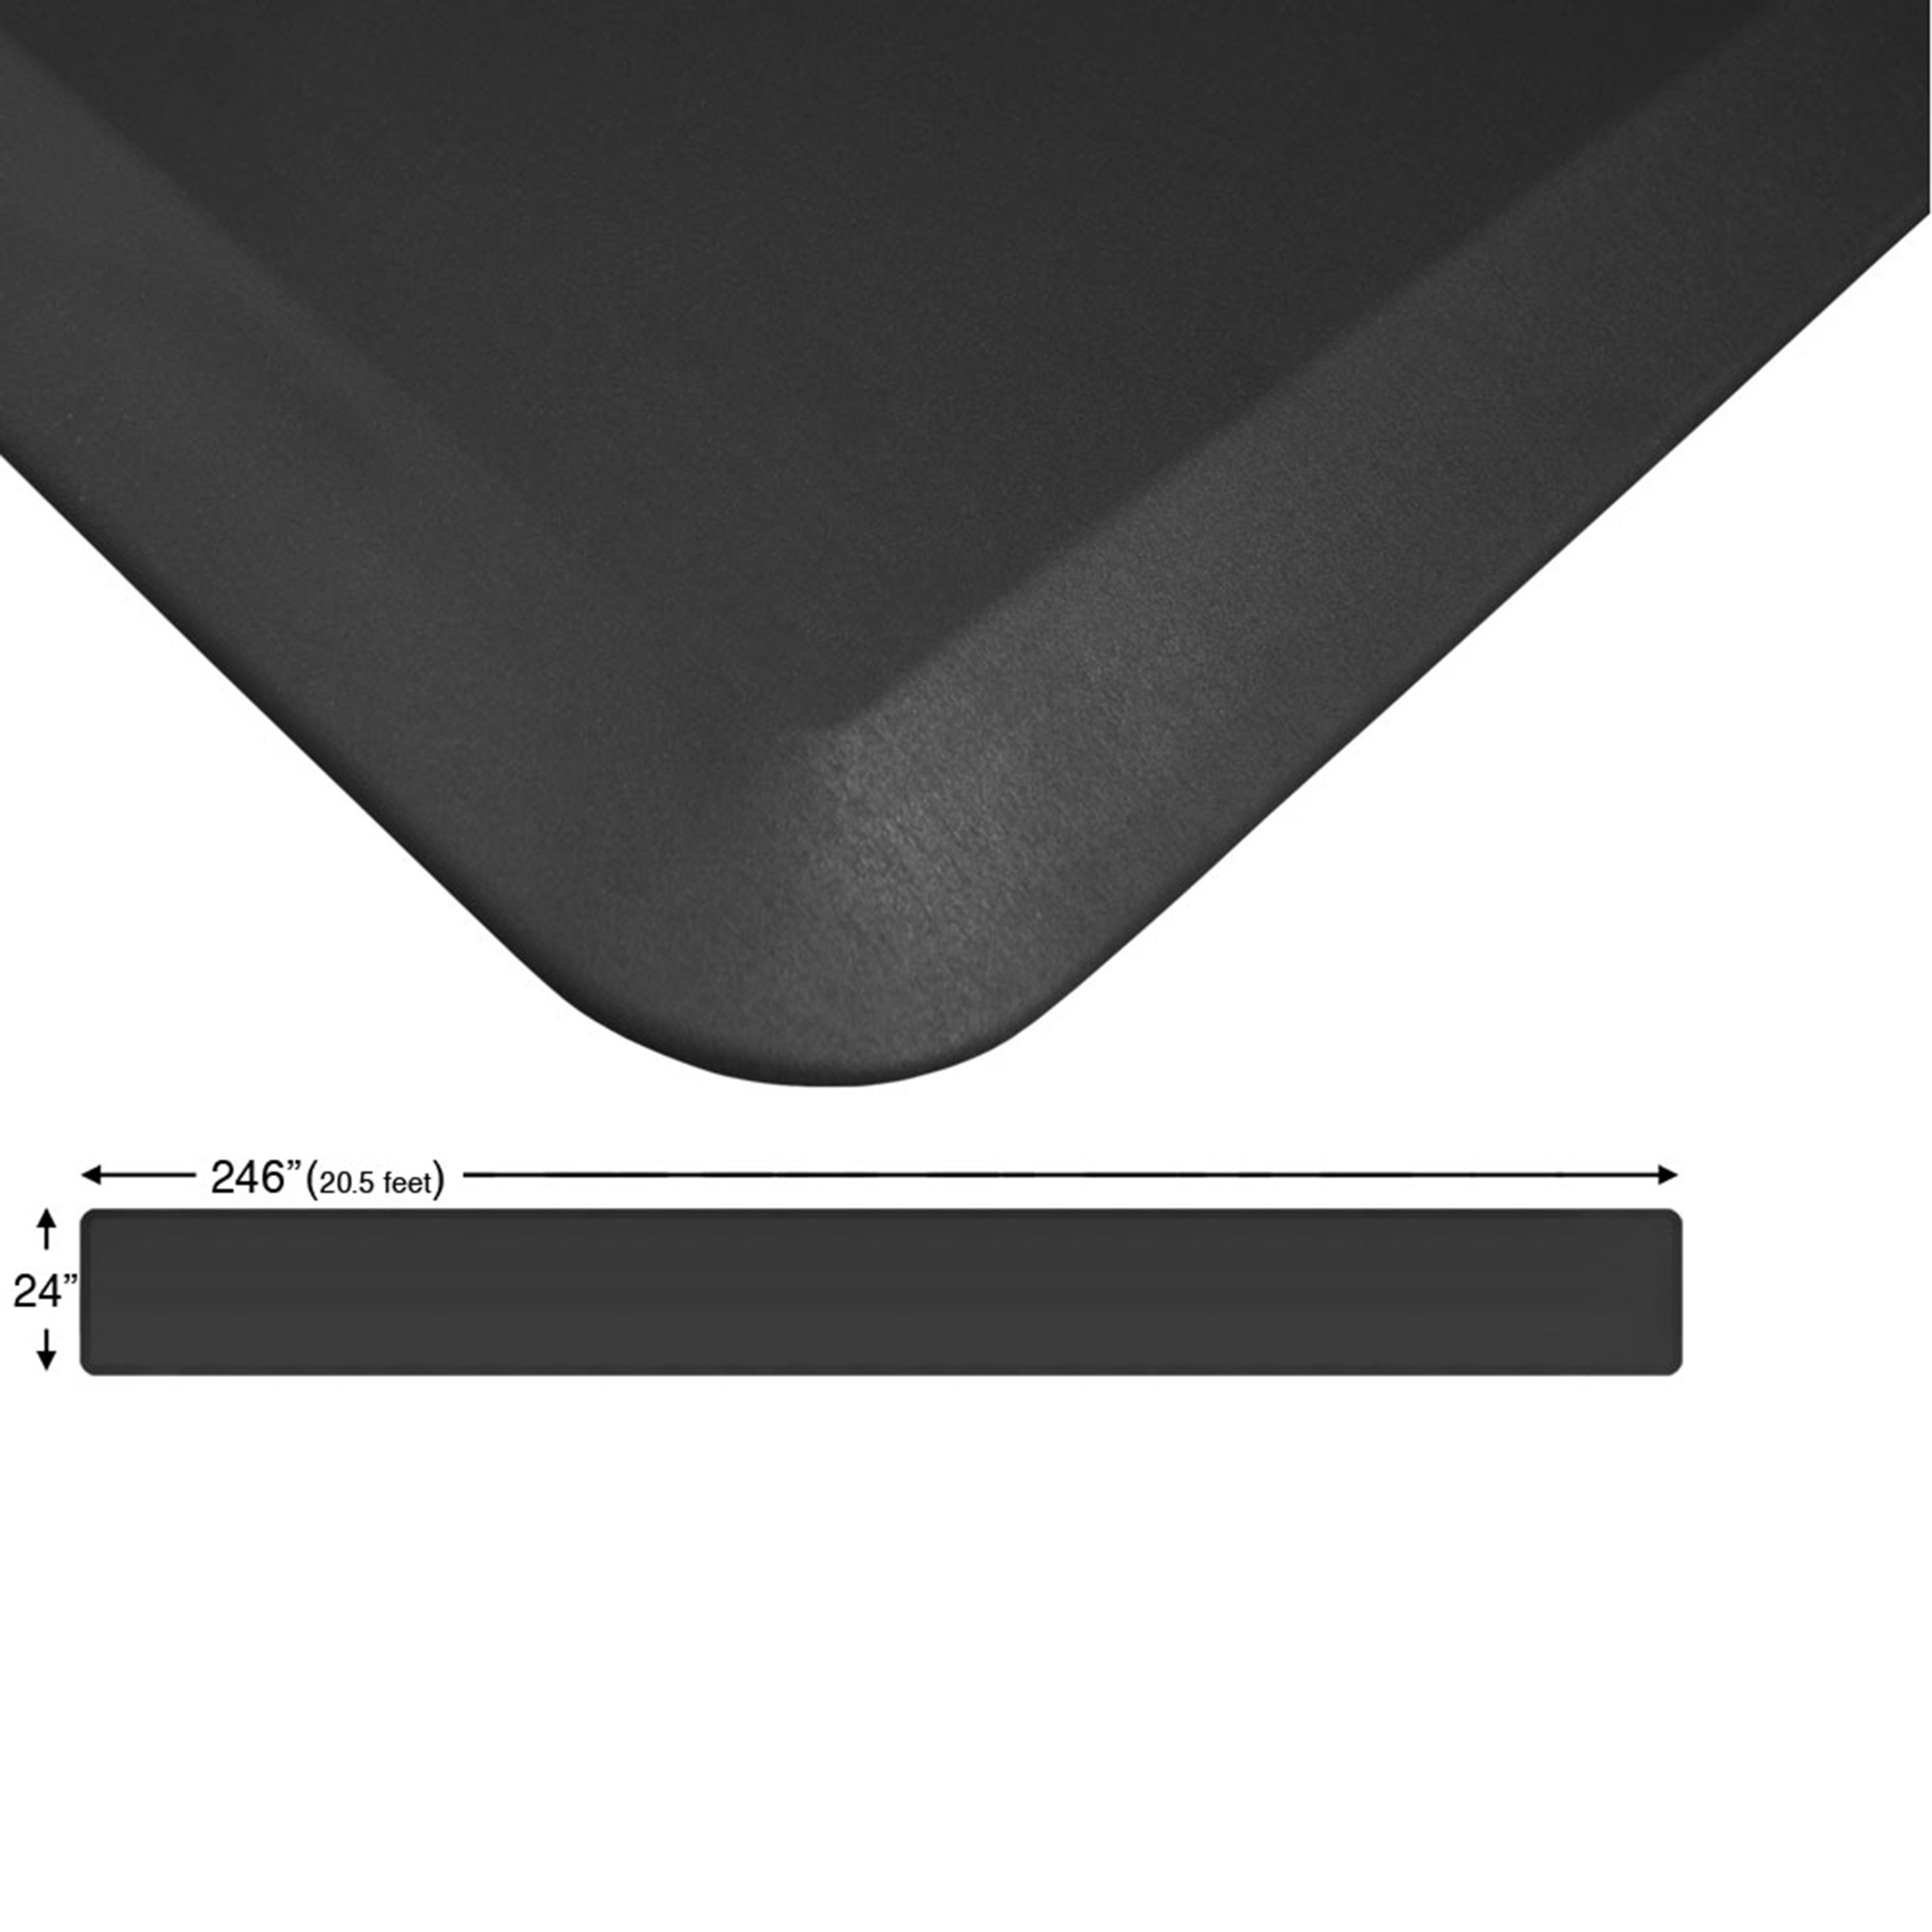 Eco-pro Continuous Comfort Mat, Black, 24" X 246"